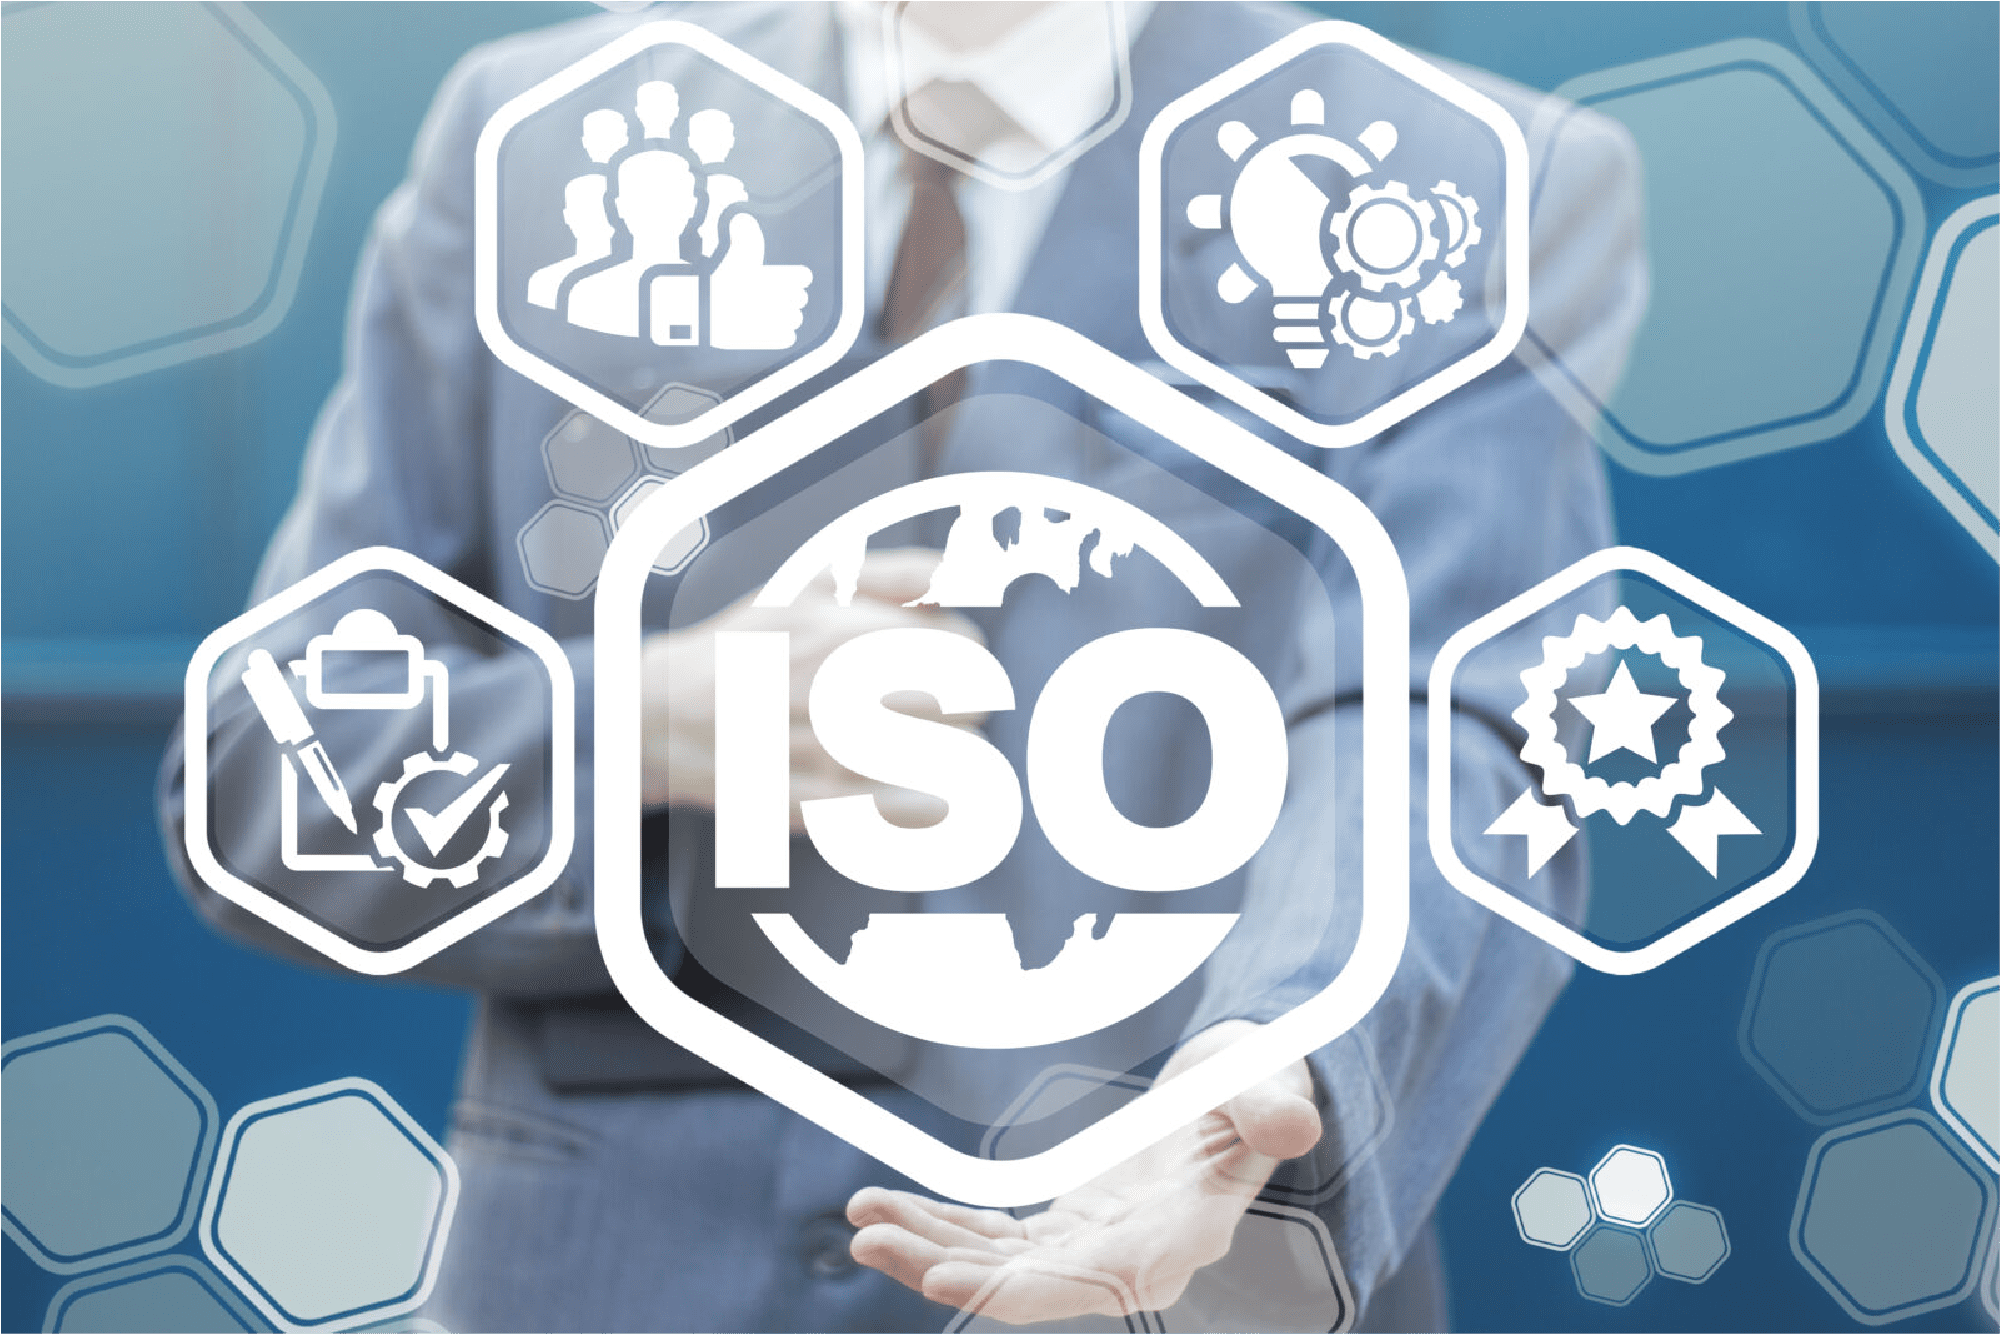 ISO Registration